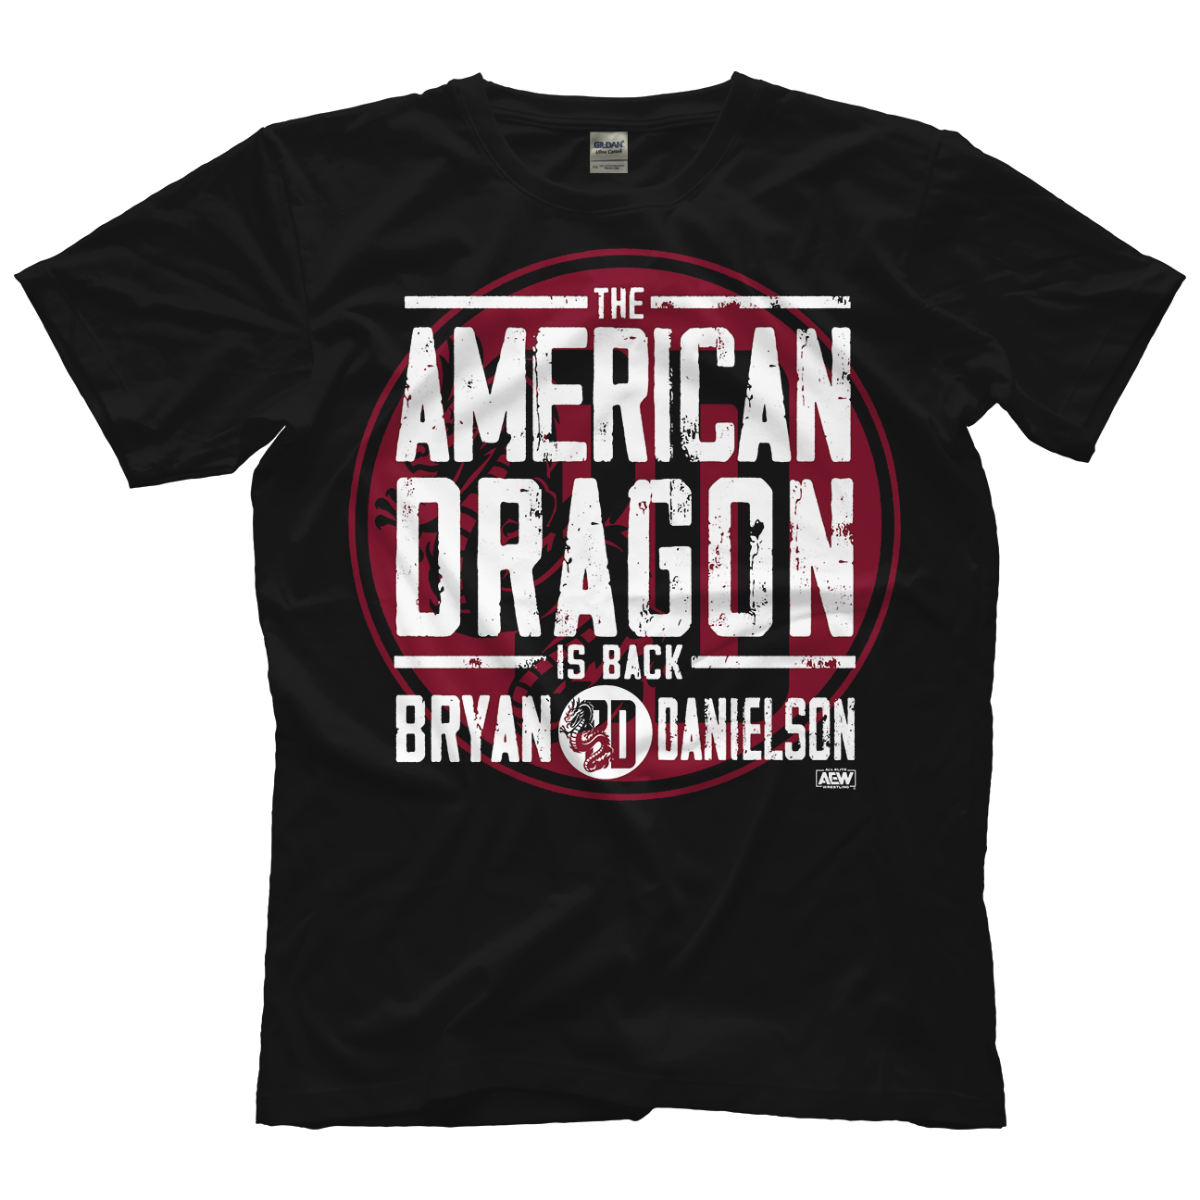 Bryan Danielson The American Dragon is Back T-Shirt